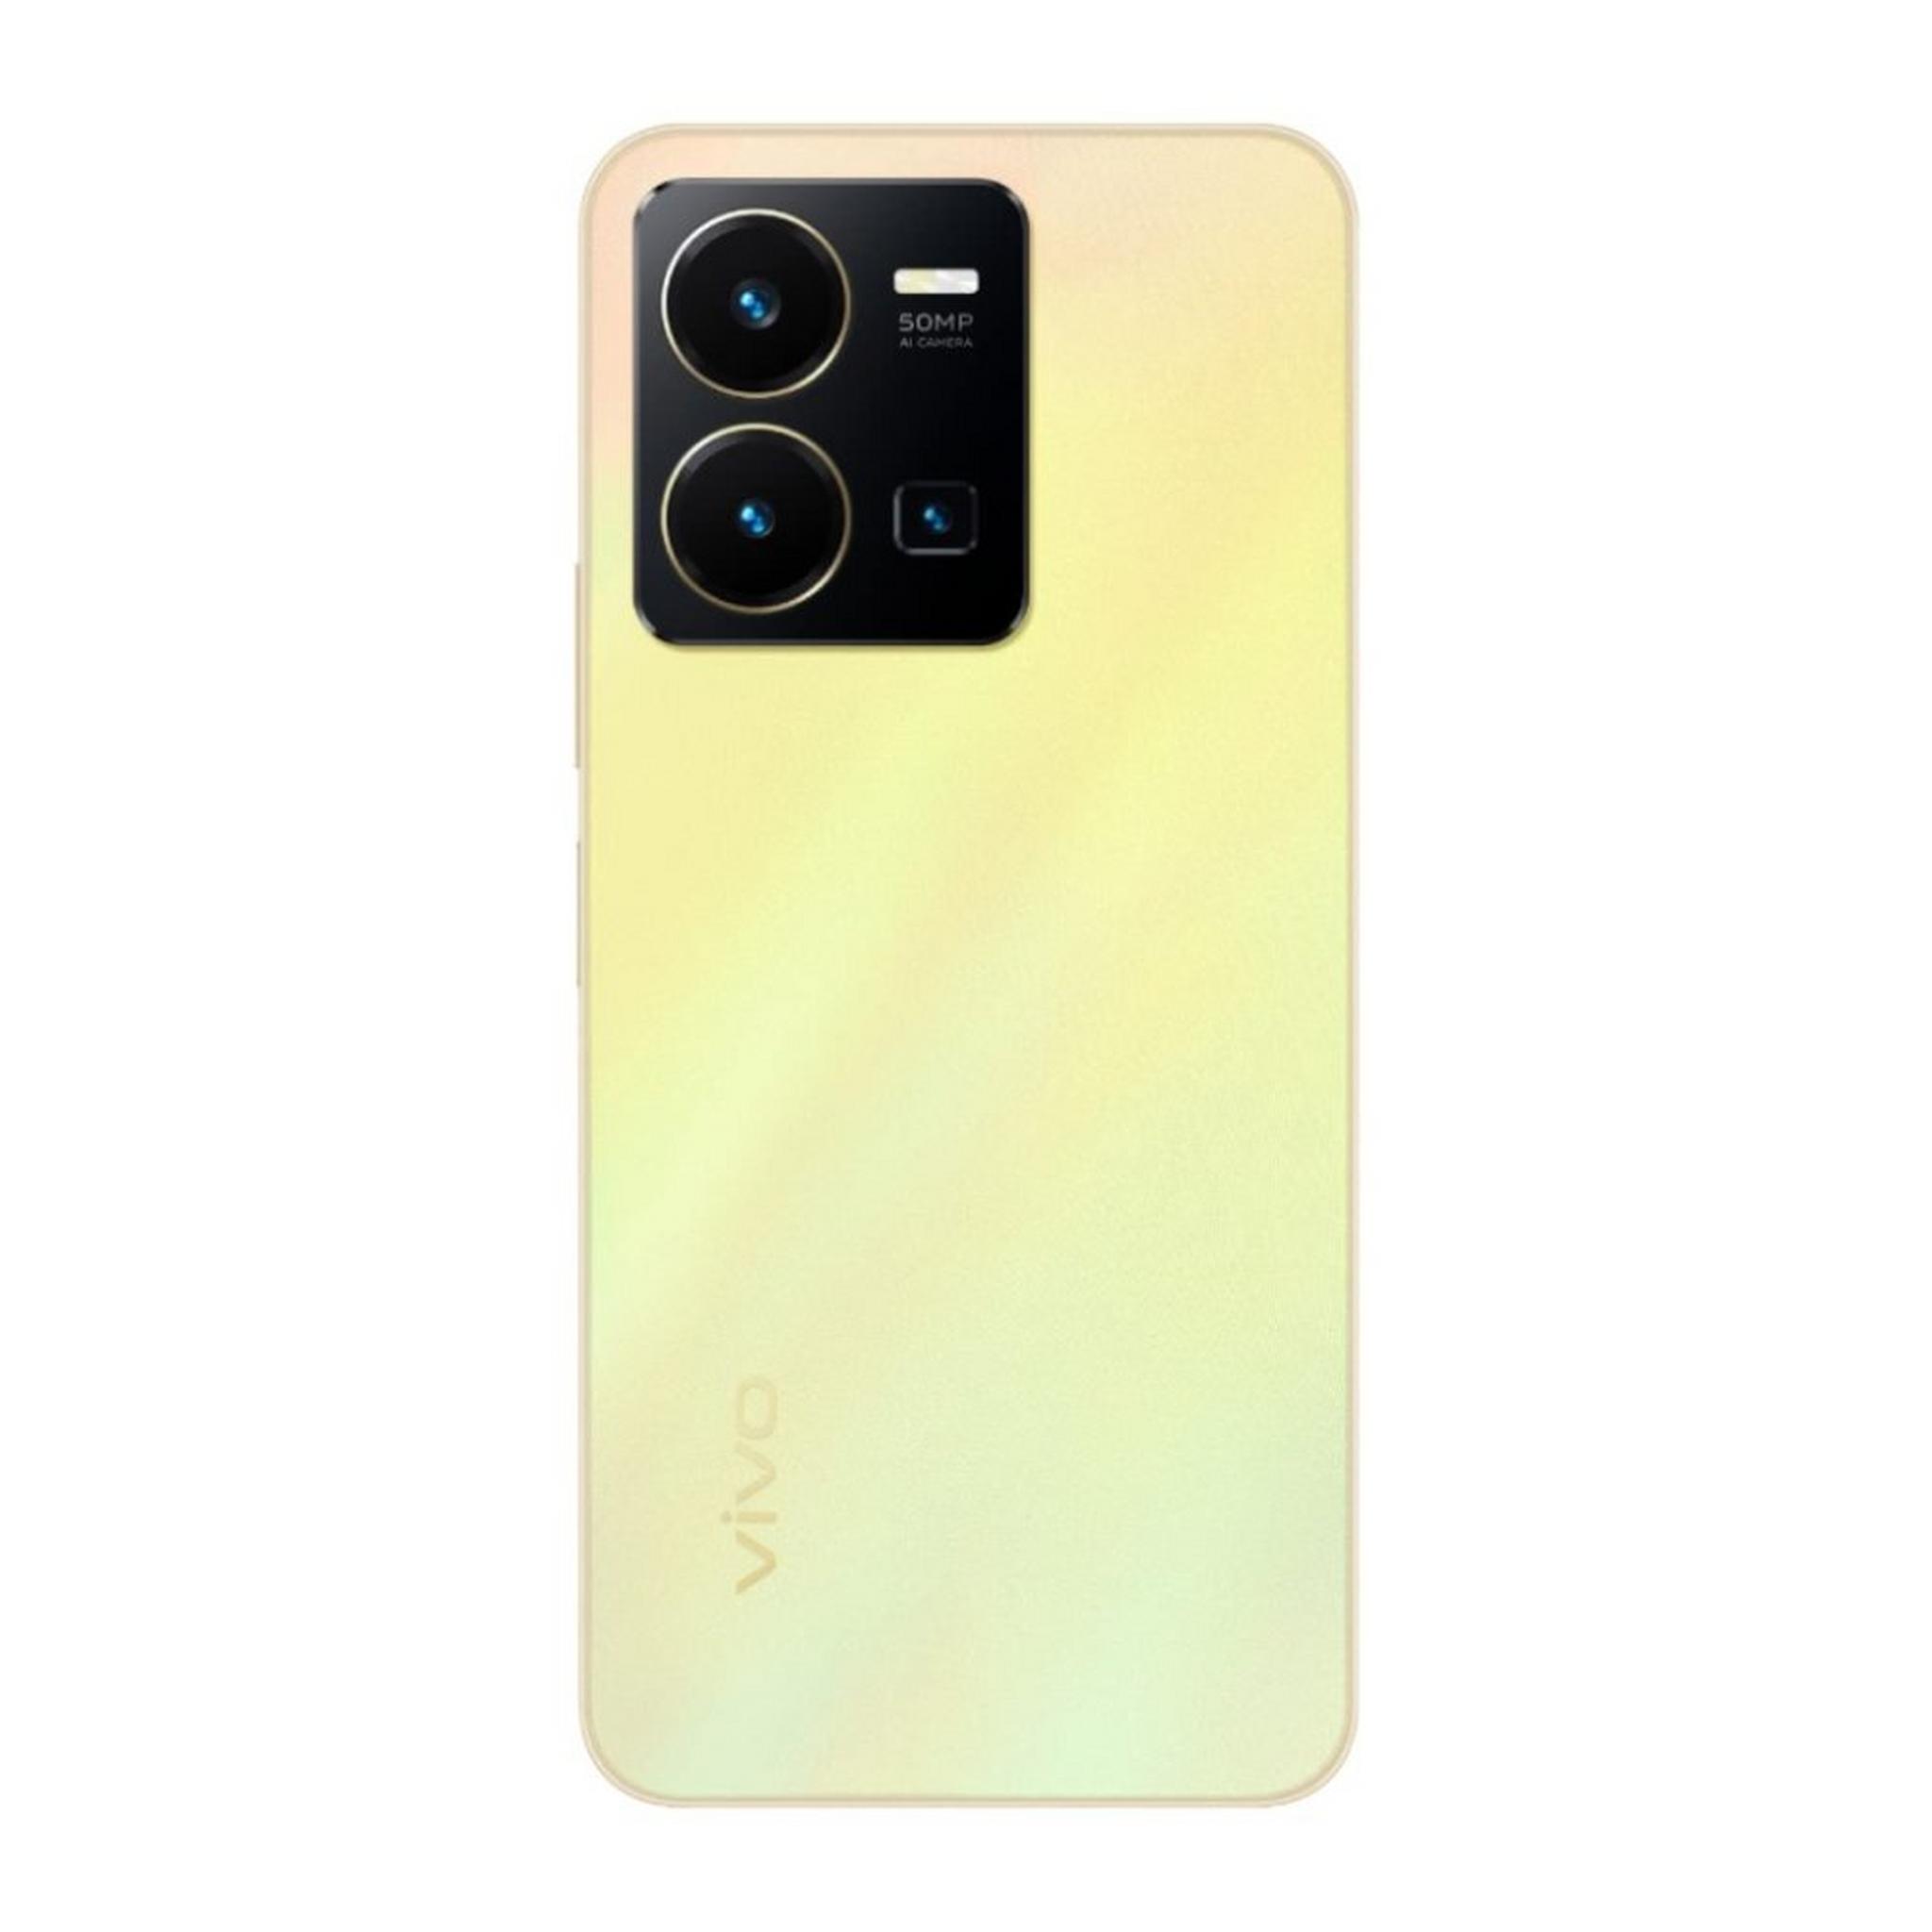 Vivo Y35 128GB Phone - Gold